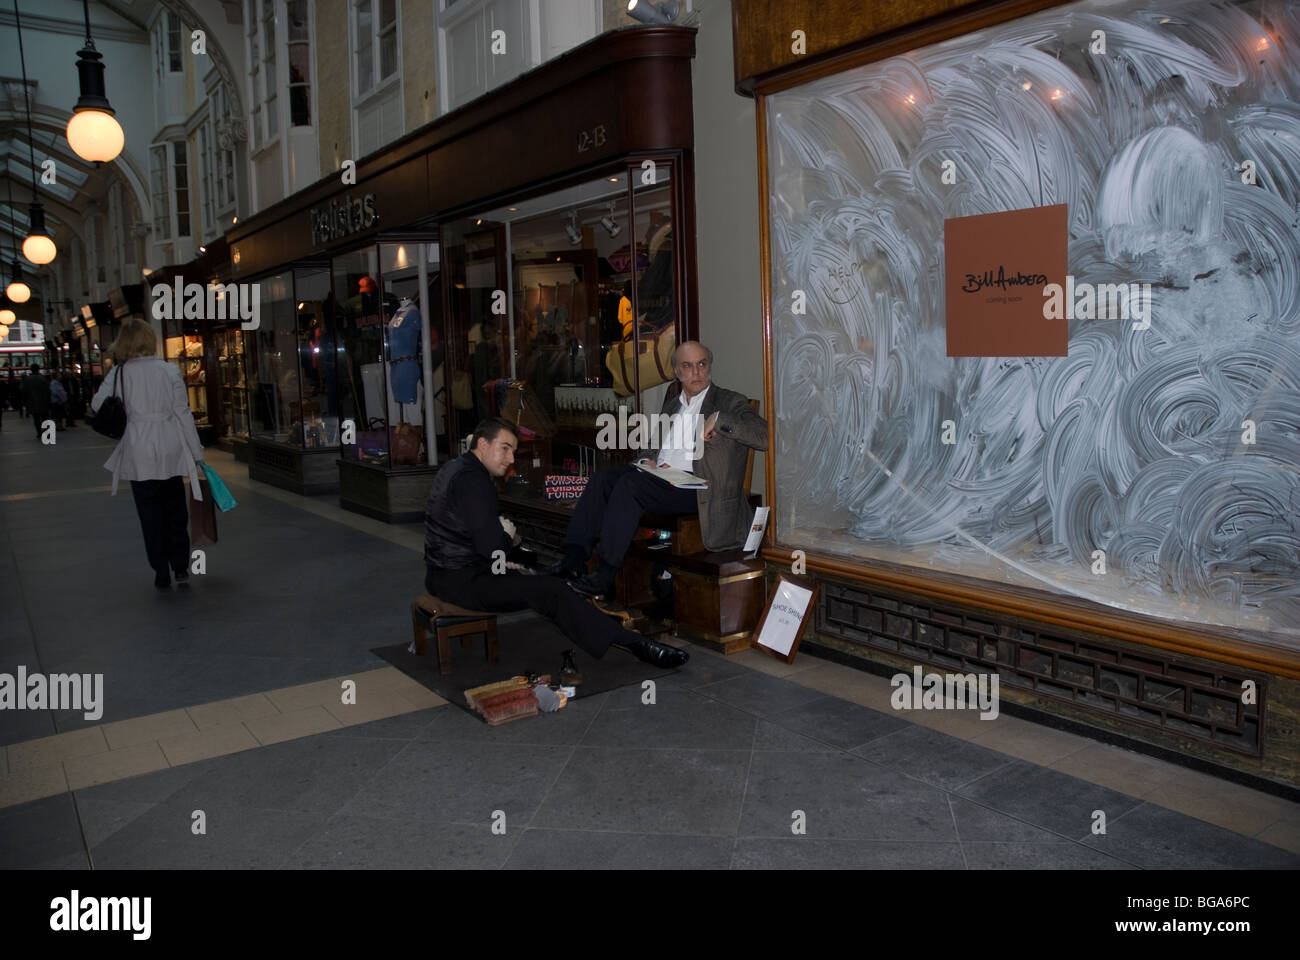 Shoe shiner in Burlington Arcade, Piccadilly London W1 Stock Photo